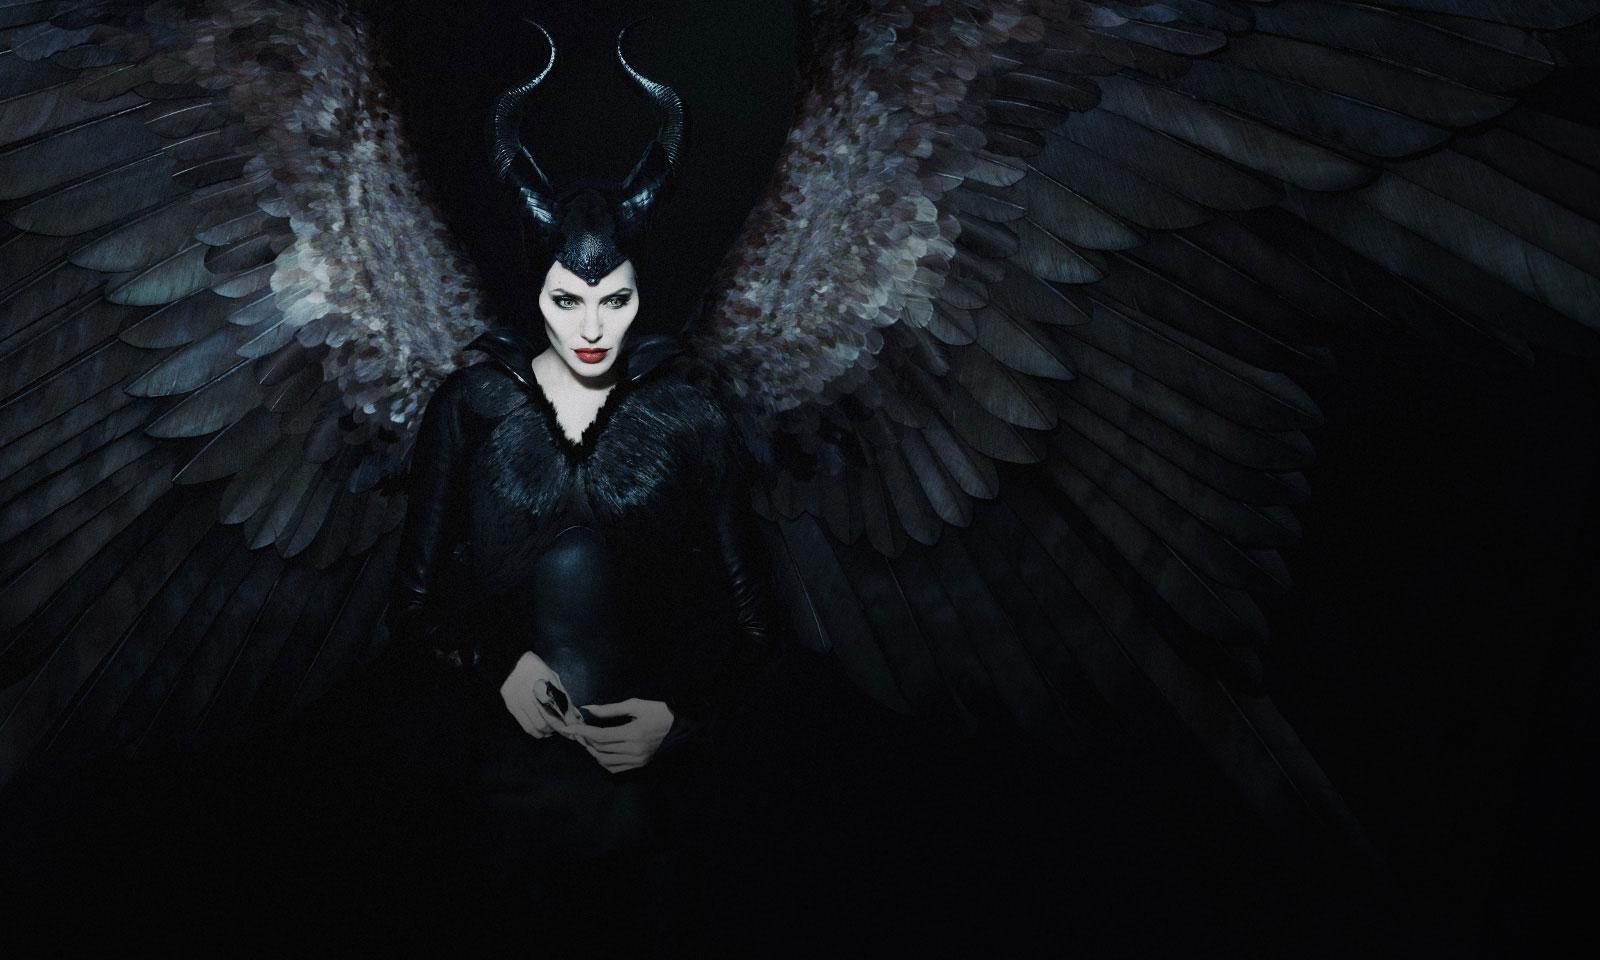 Maleficent Movie (2014) HD, iPad & iPhone Wallpaper